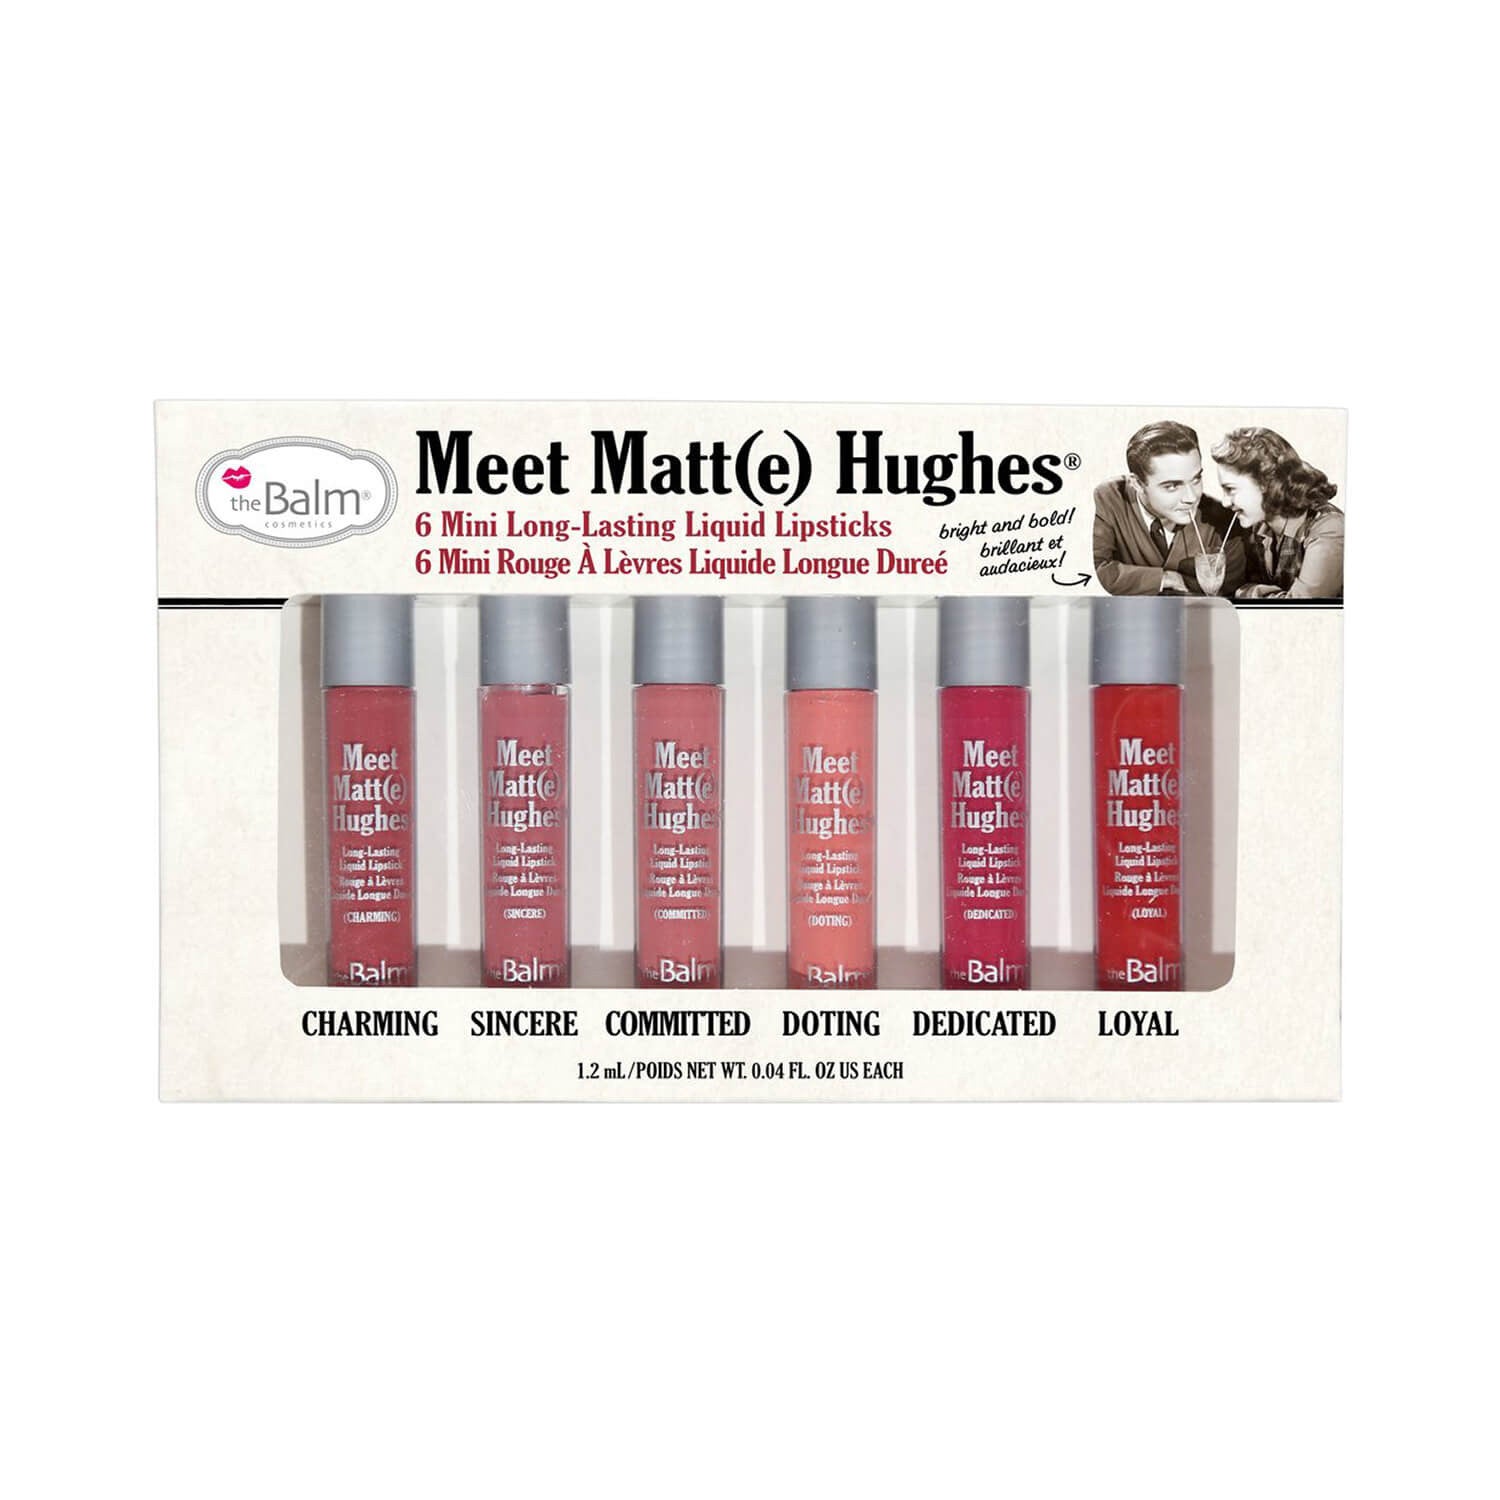 theBalm Meet Matte Hughes® Set of 6 Mini Long-Lasting Liquid Lipsticks